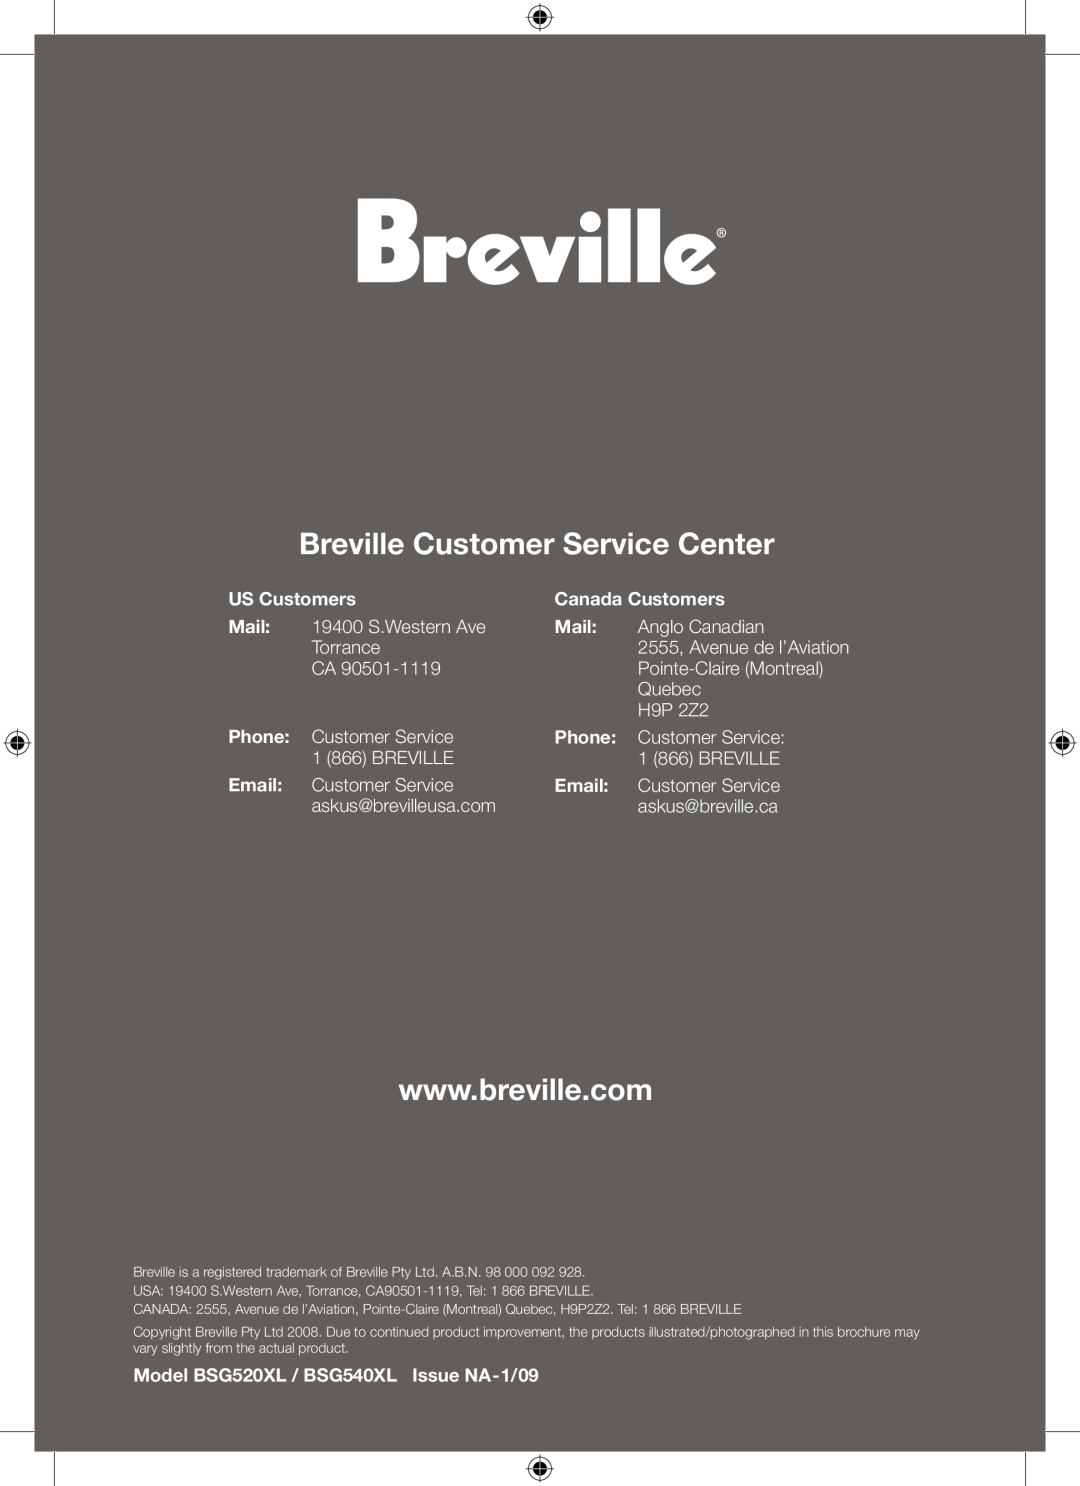 Breville BSG520XL, BSG540XL manual Breville Customer Service Center, US Customers, Canada Customers, Mail, Phone 